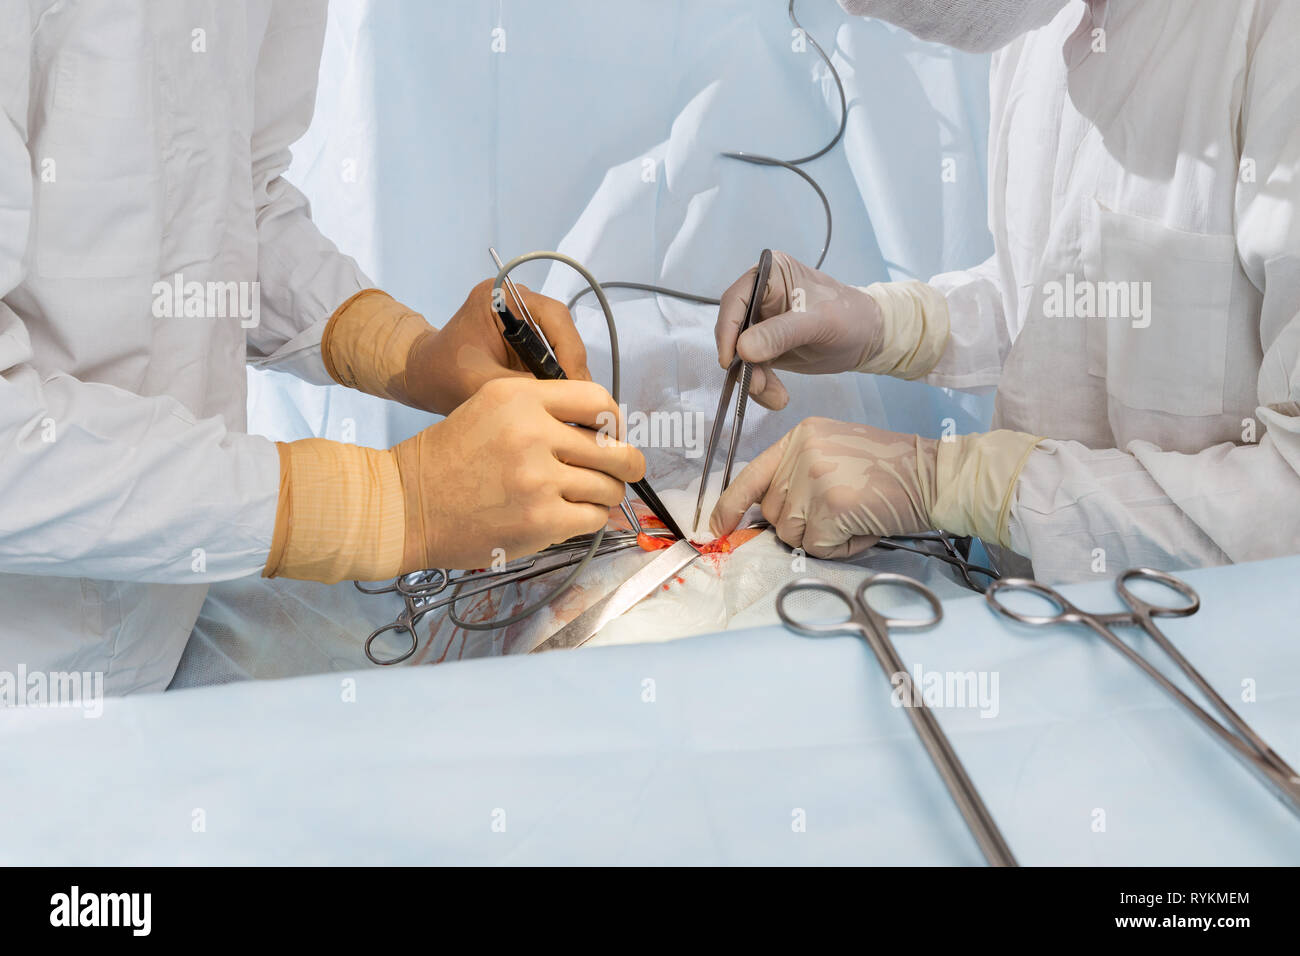 surgeons during surgery Stock Photo